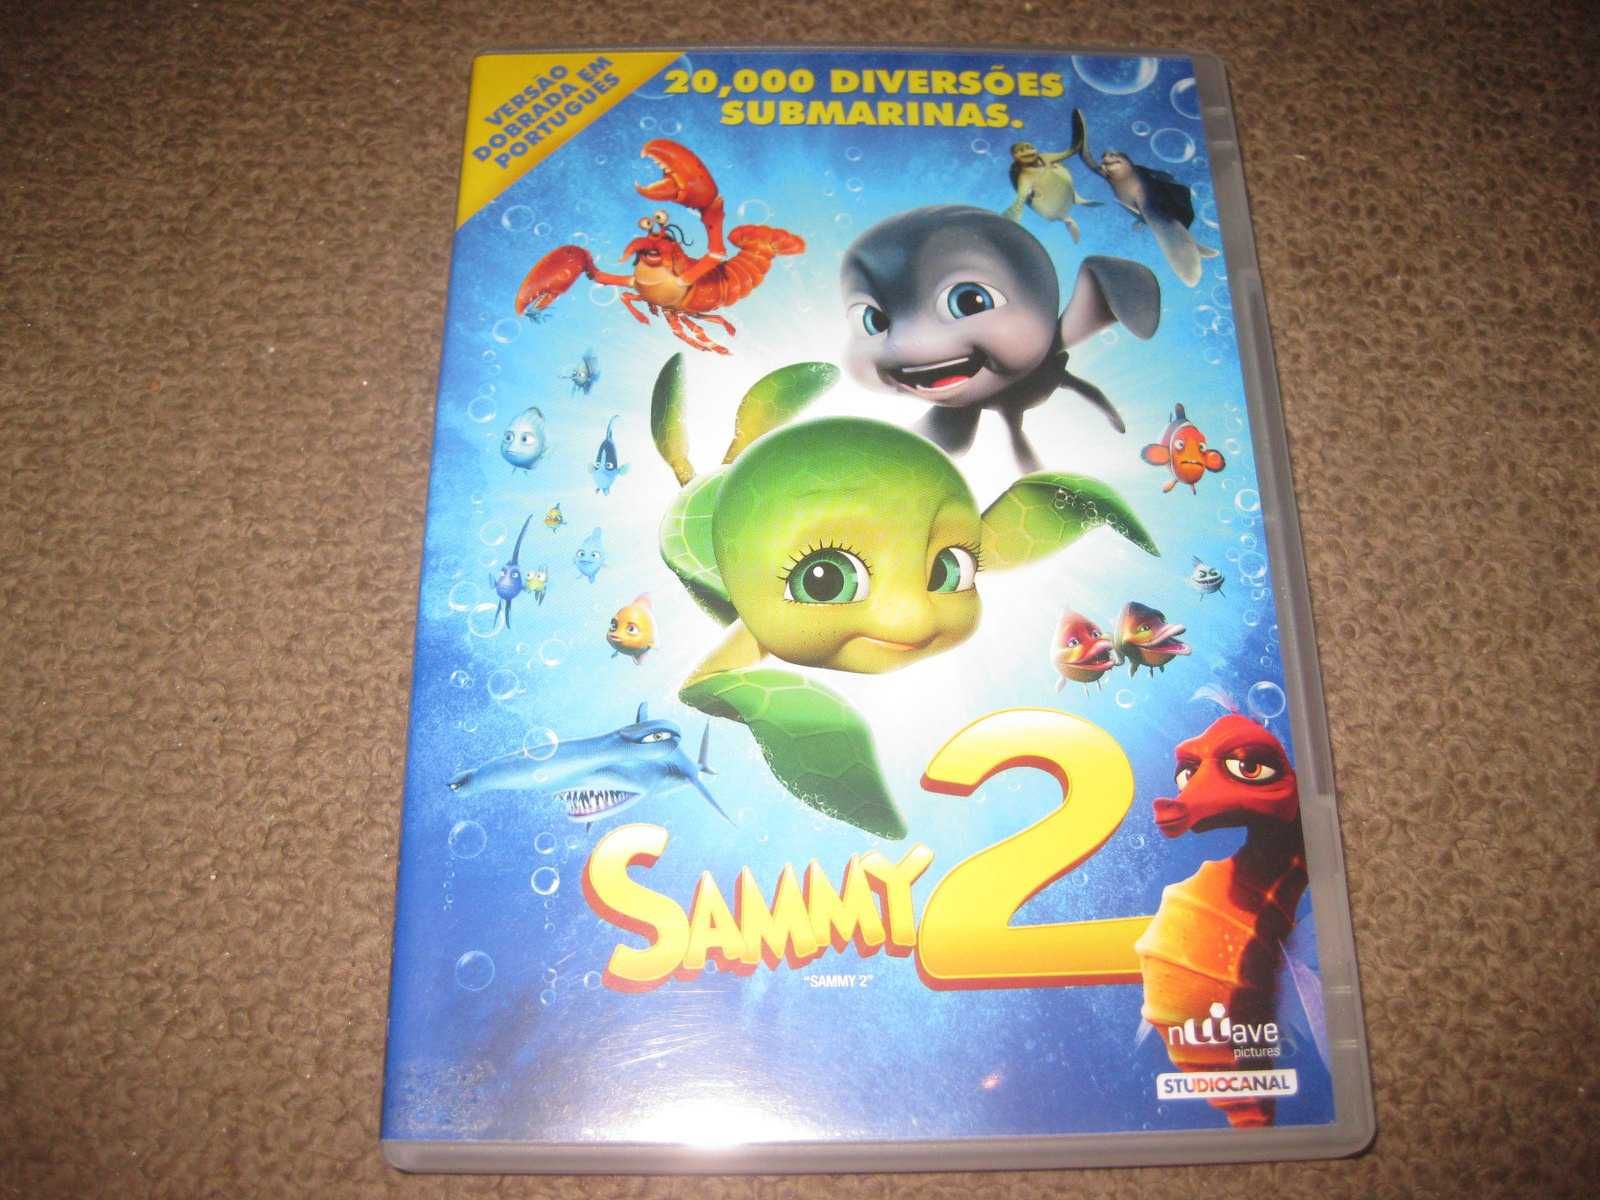 DVD "Sammy 2" (Animação)